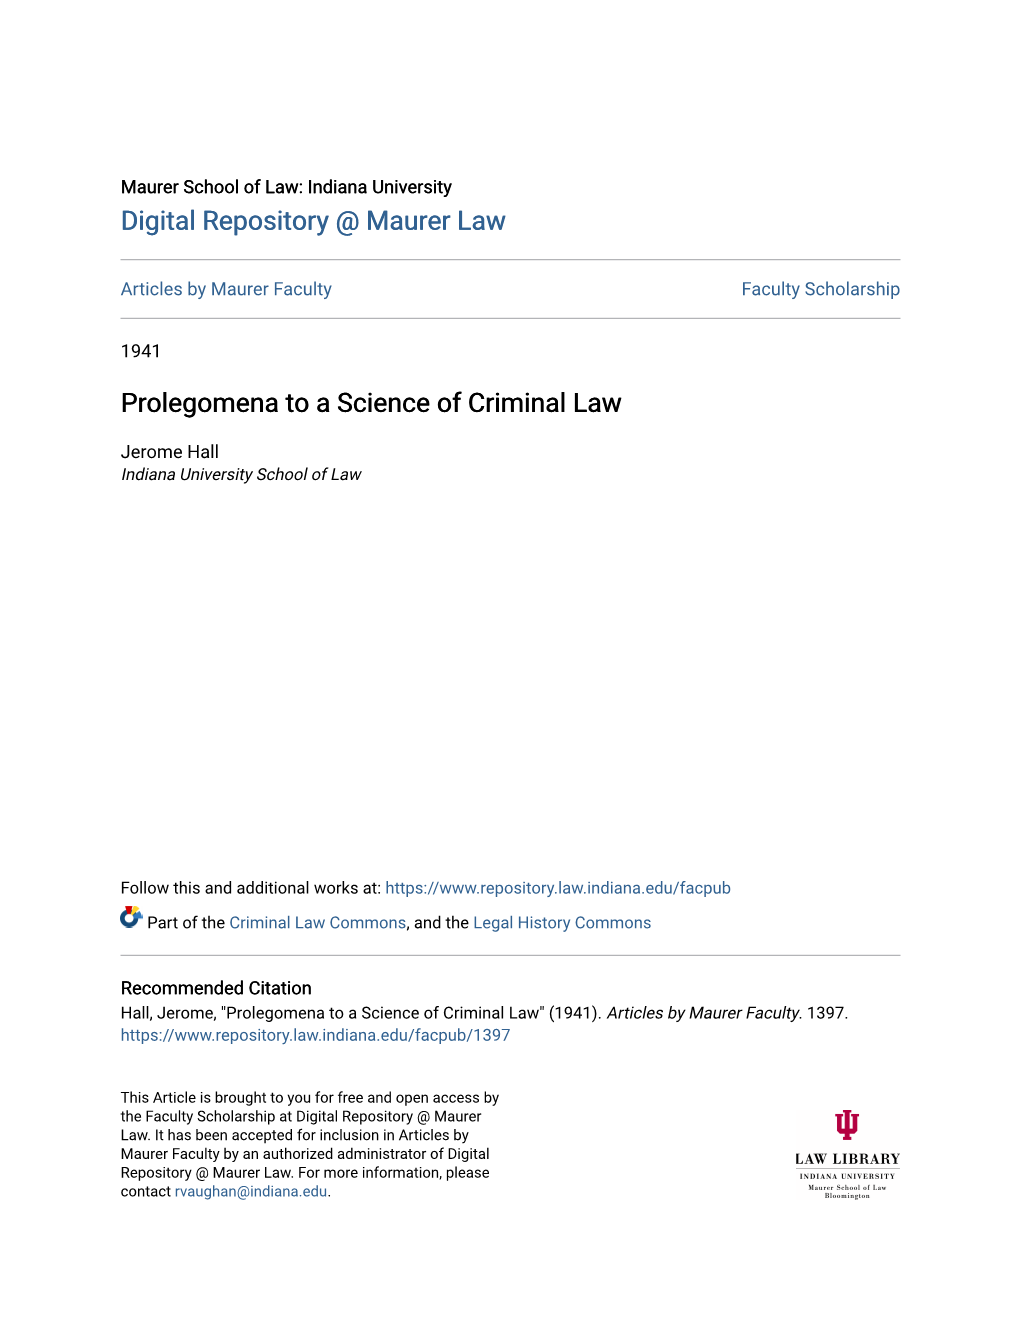 Prolegomena to a Science of Criminal Law